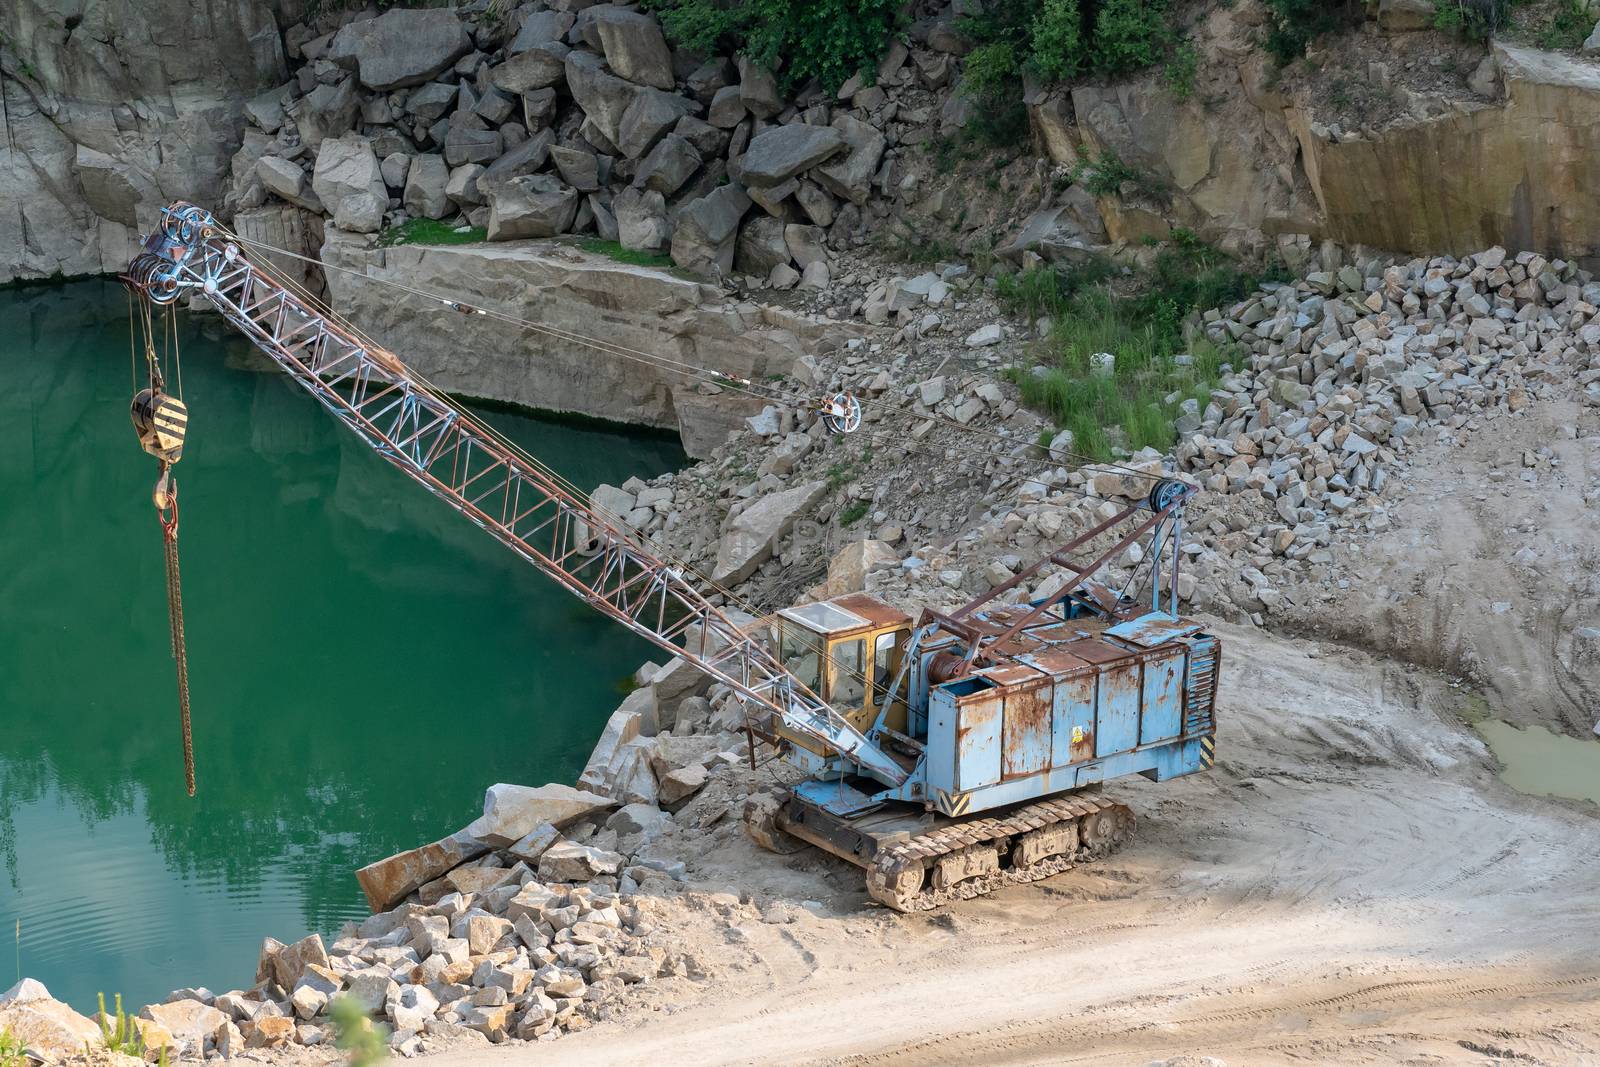 Mining in the granite quarry. Working mining machine - old crane. Mining industry.